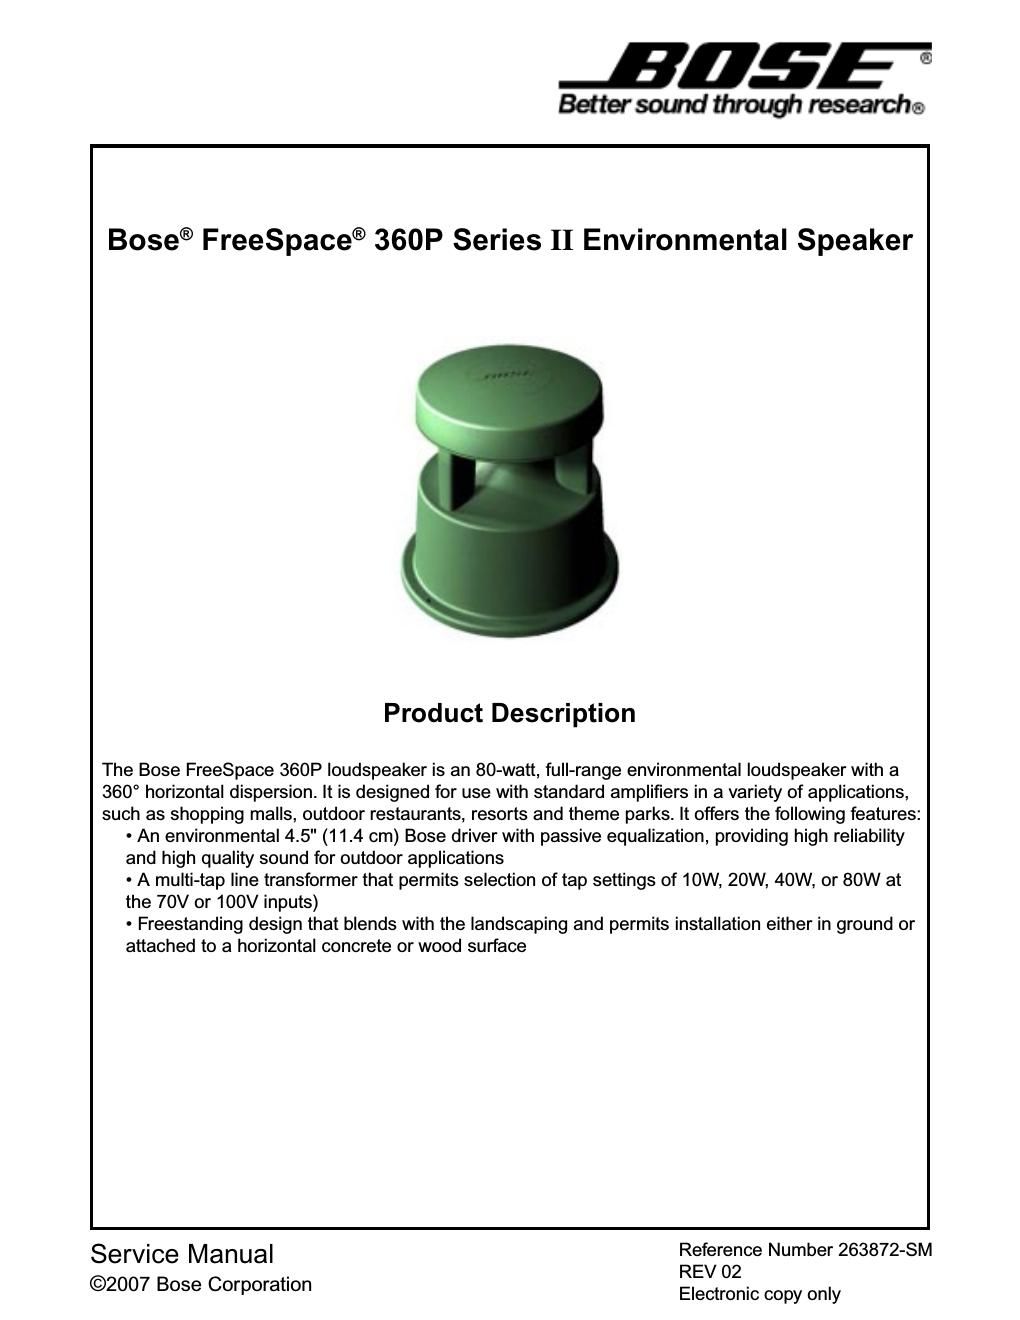 bose freespace 360p 263872 service manual rev02